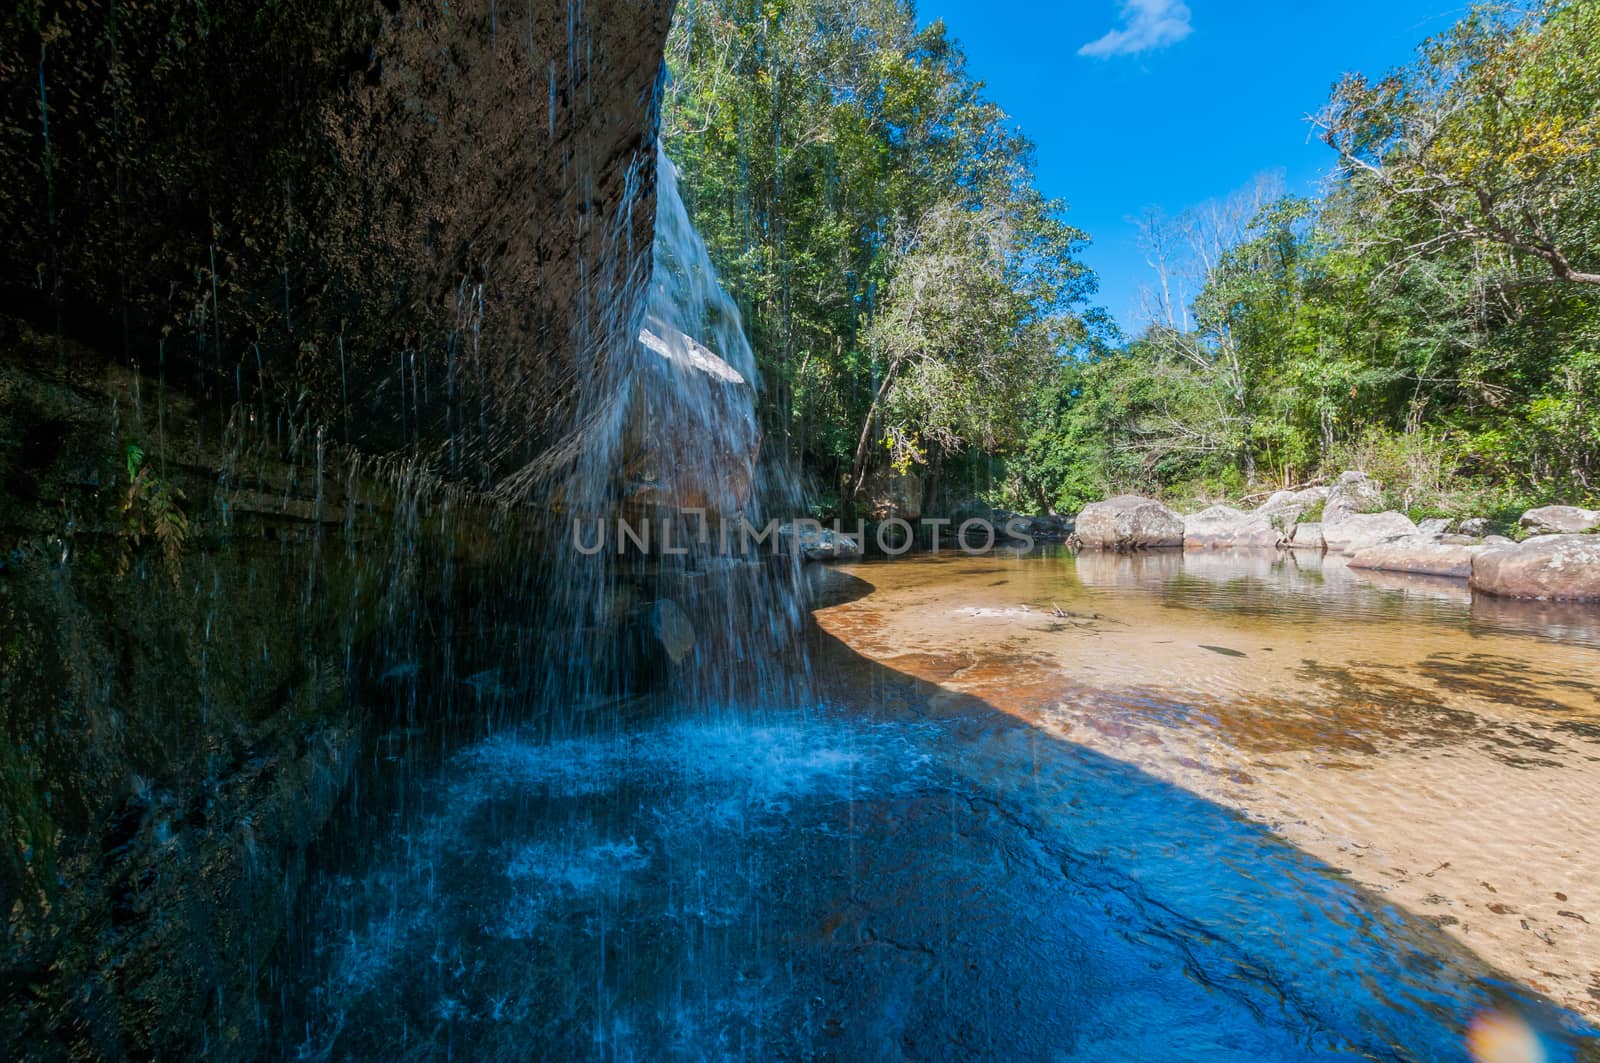 Landscape of waterfall in Phu Kradueng National Park, Thailand